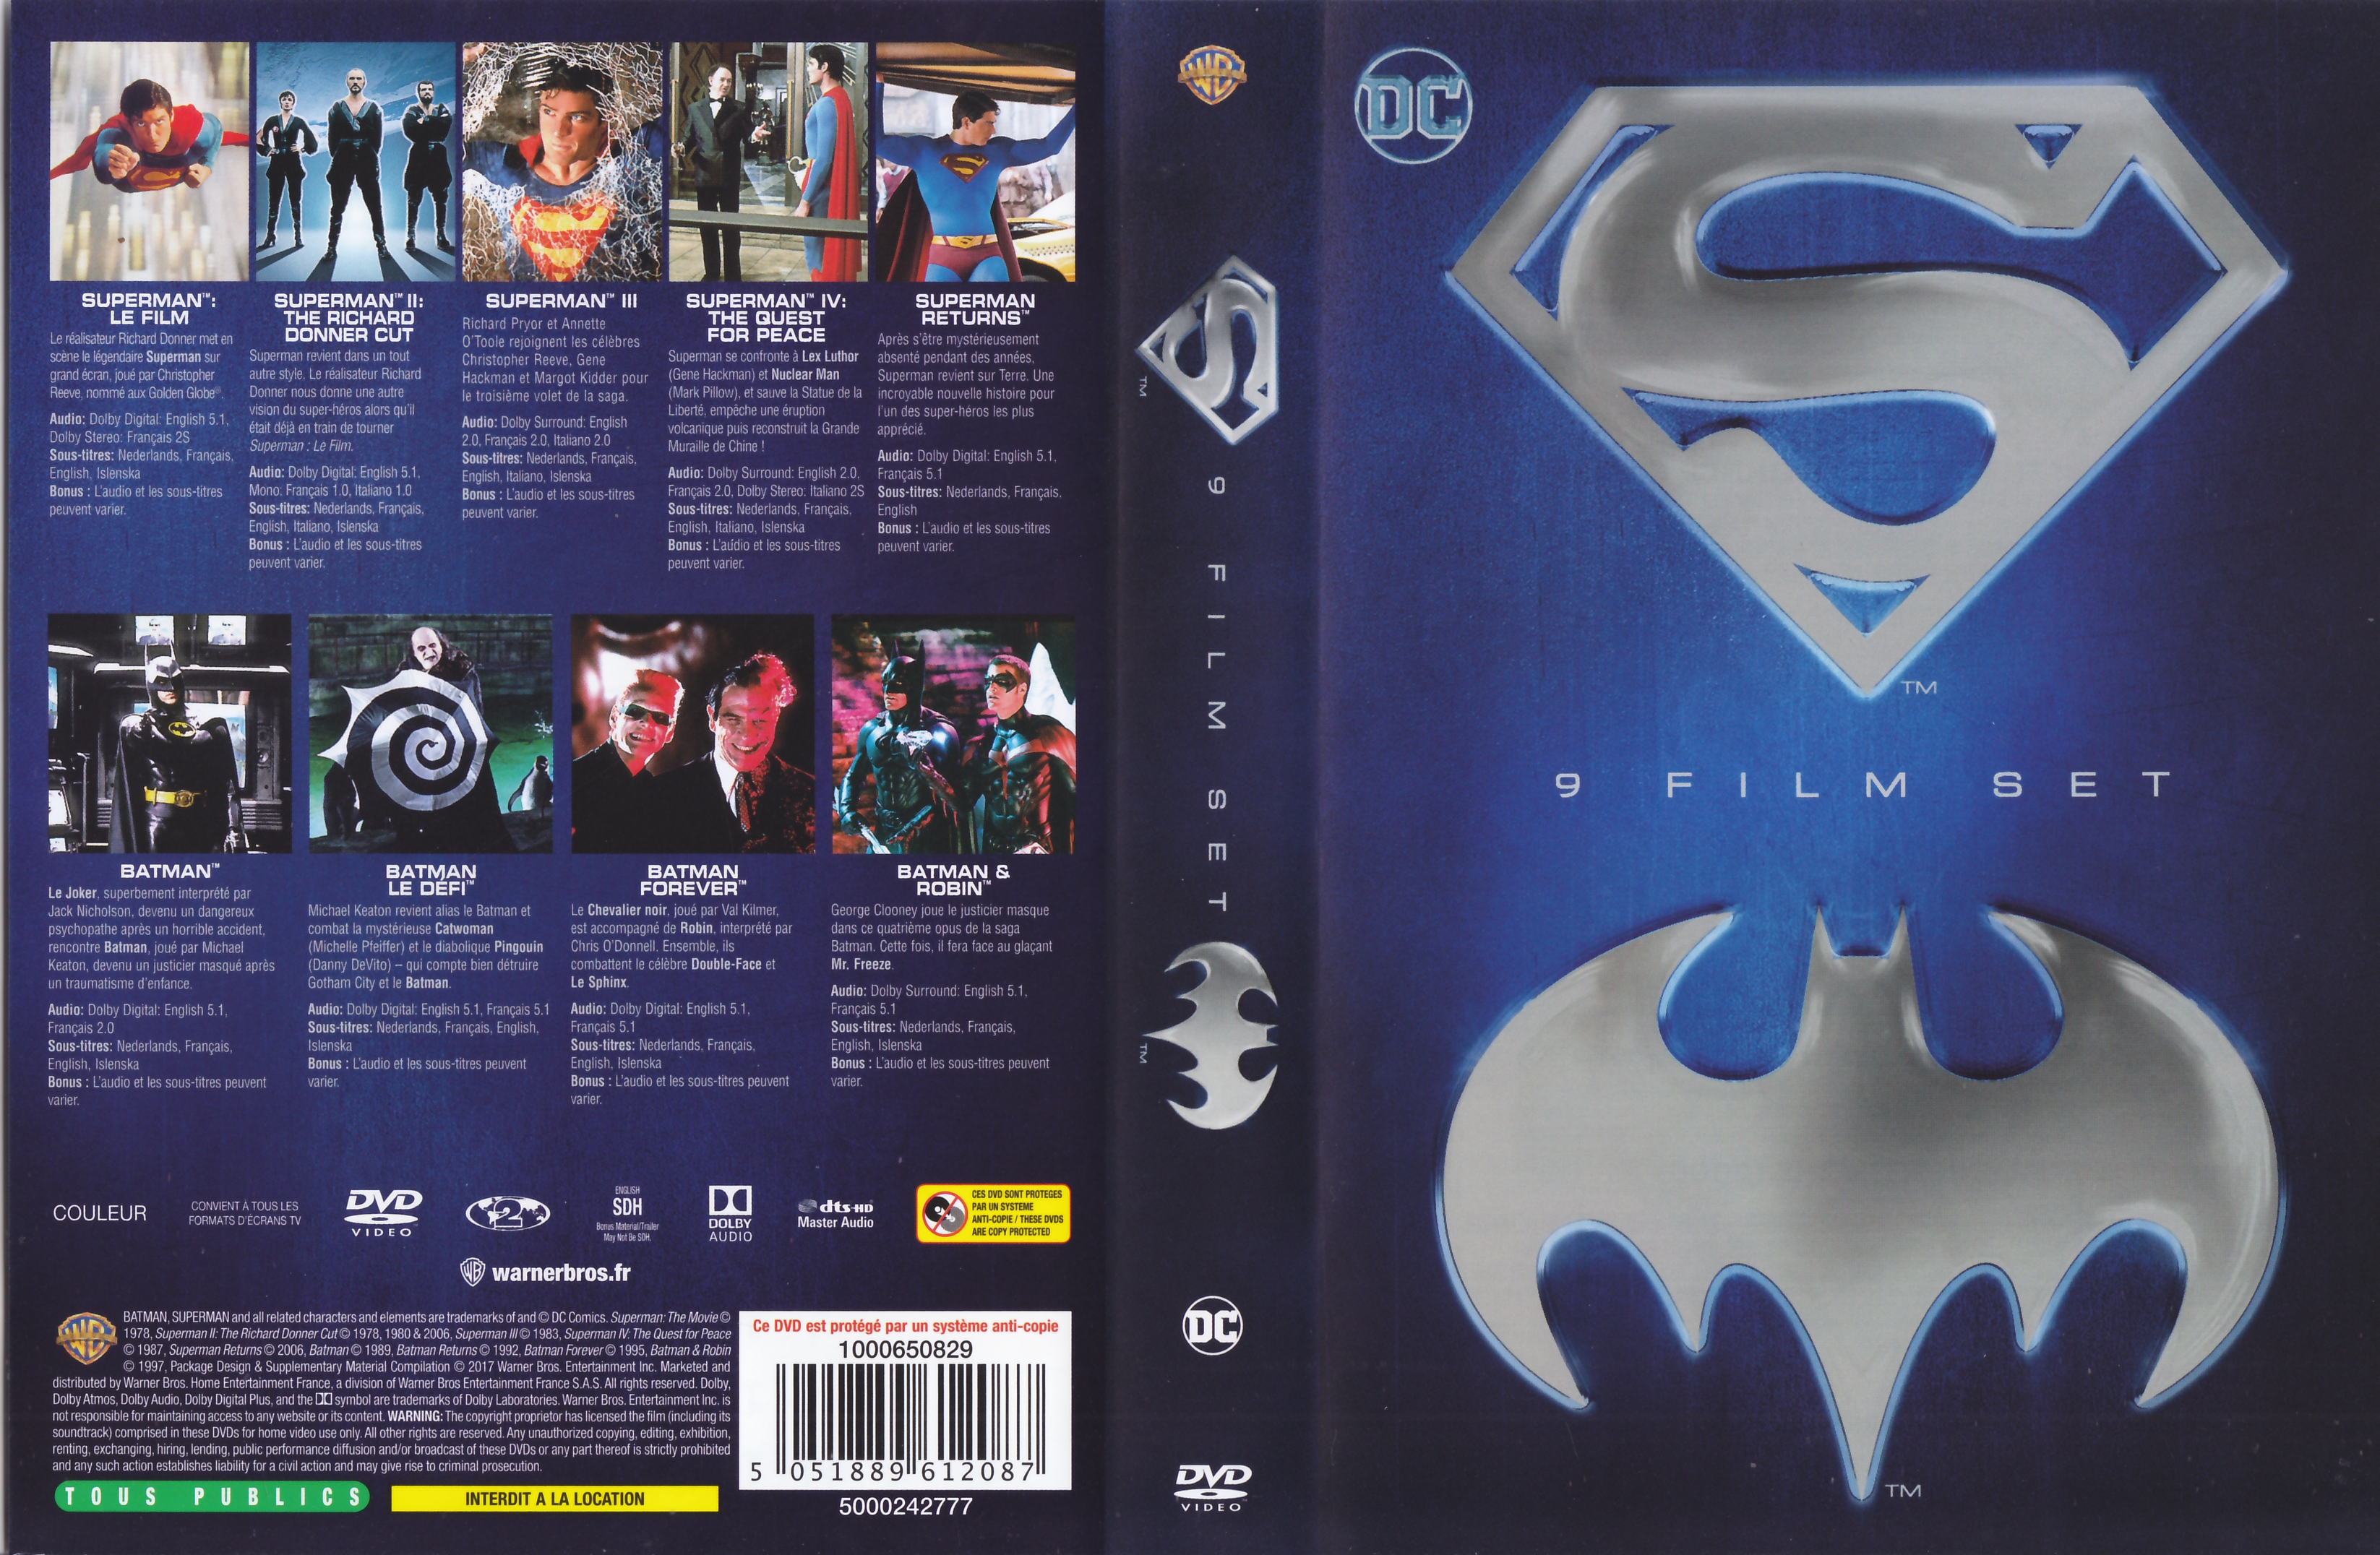 Jaquette DVD Superman Batman 9 film set